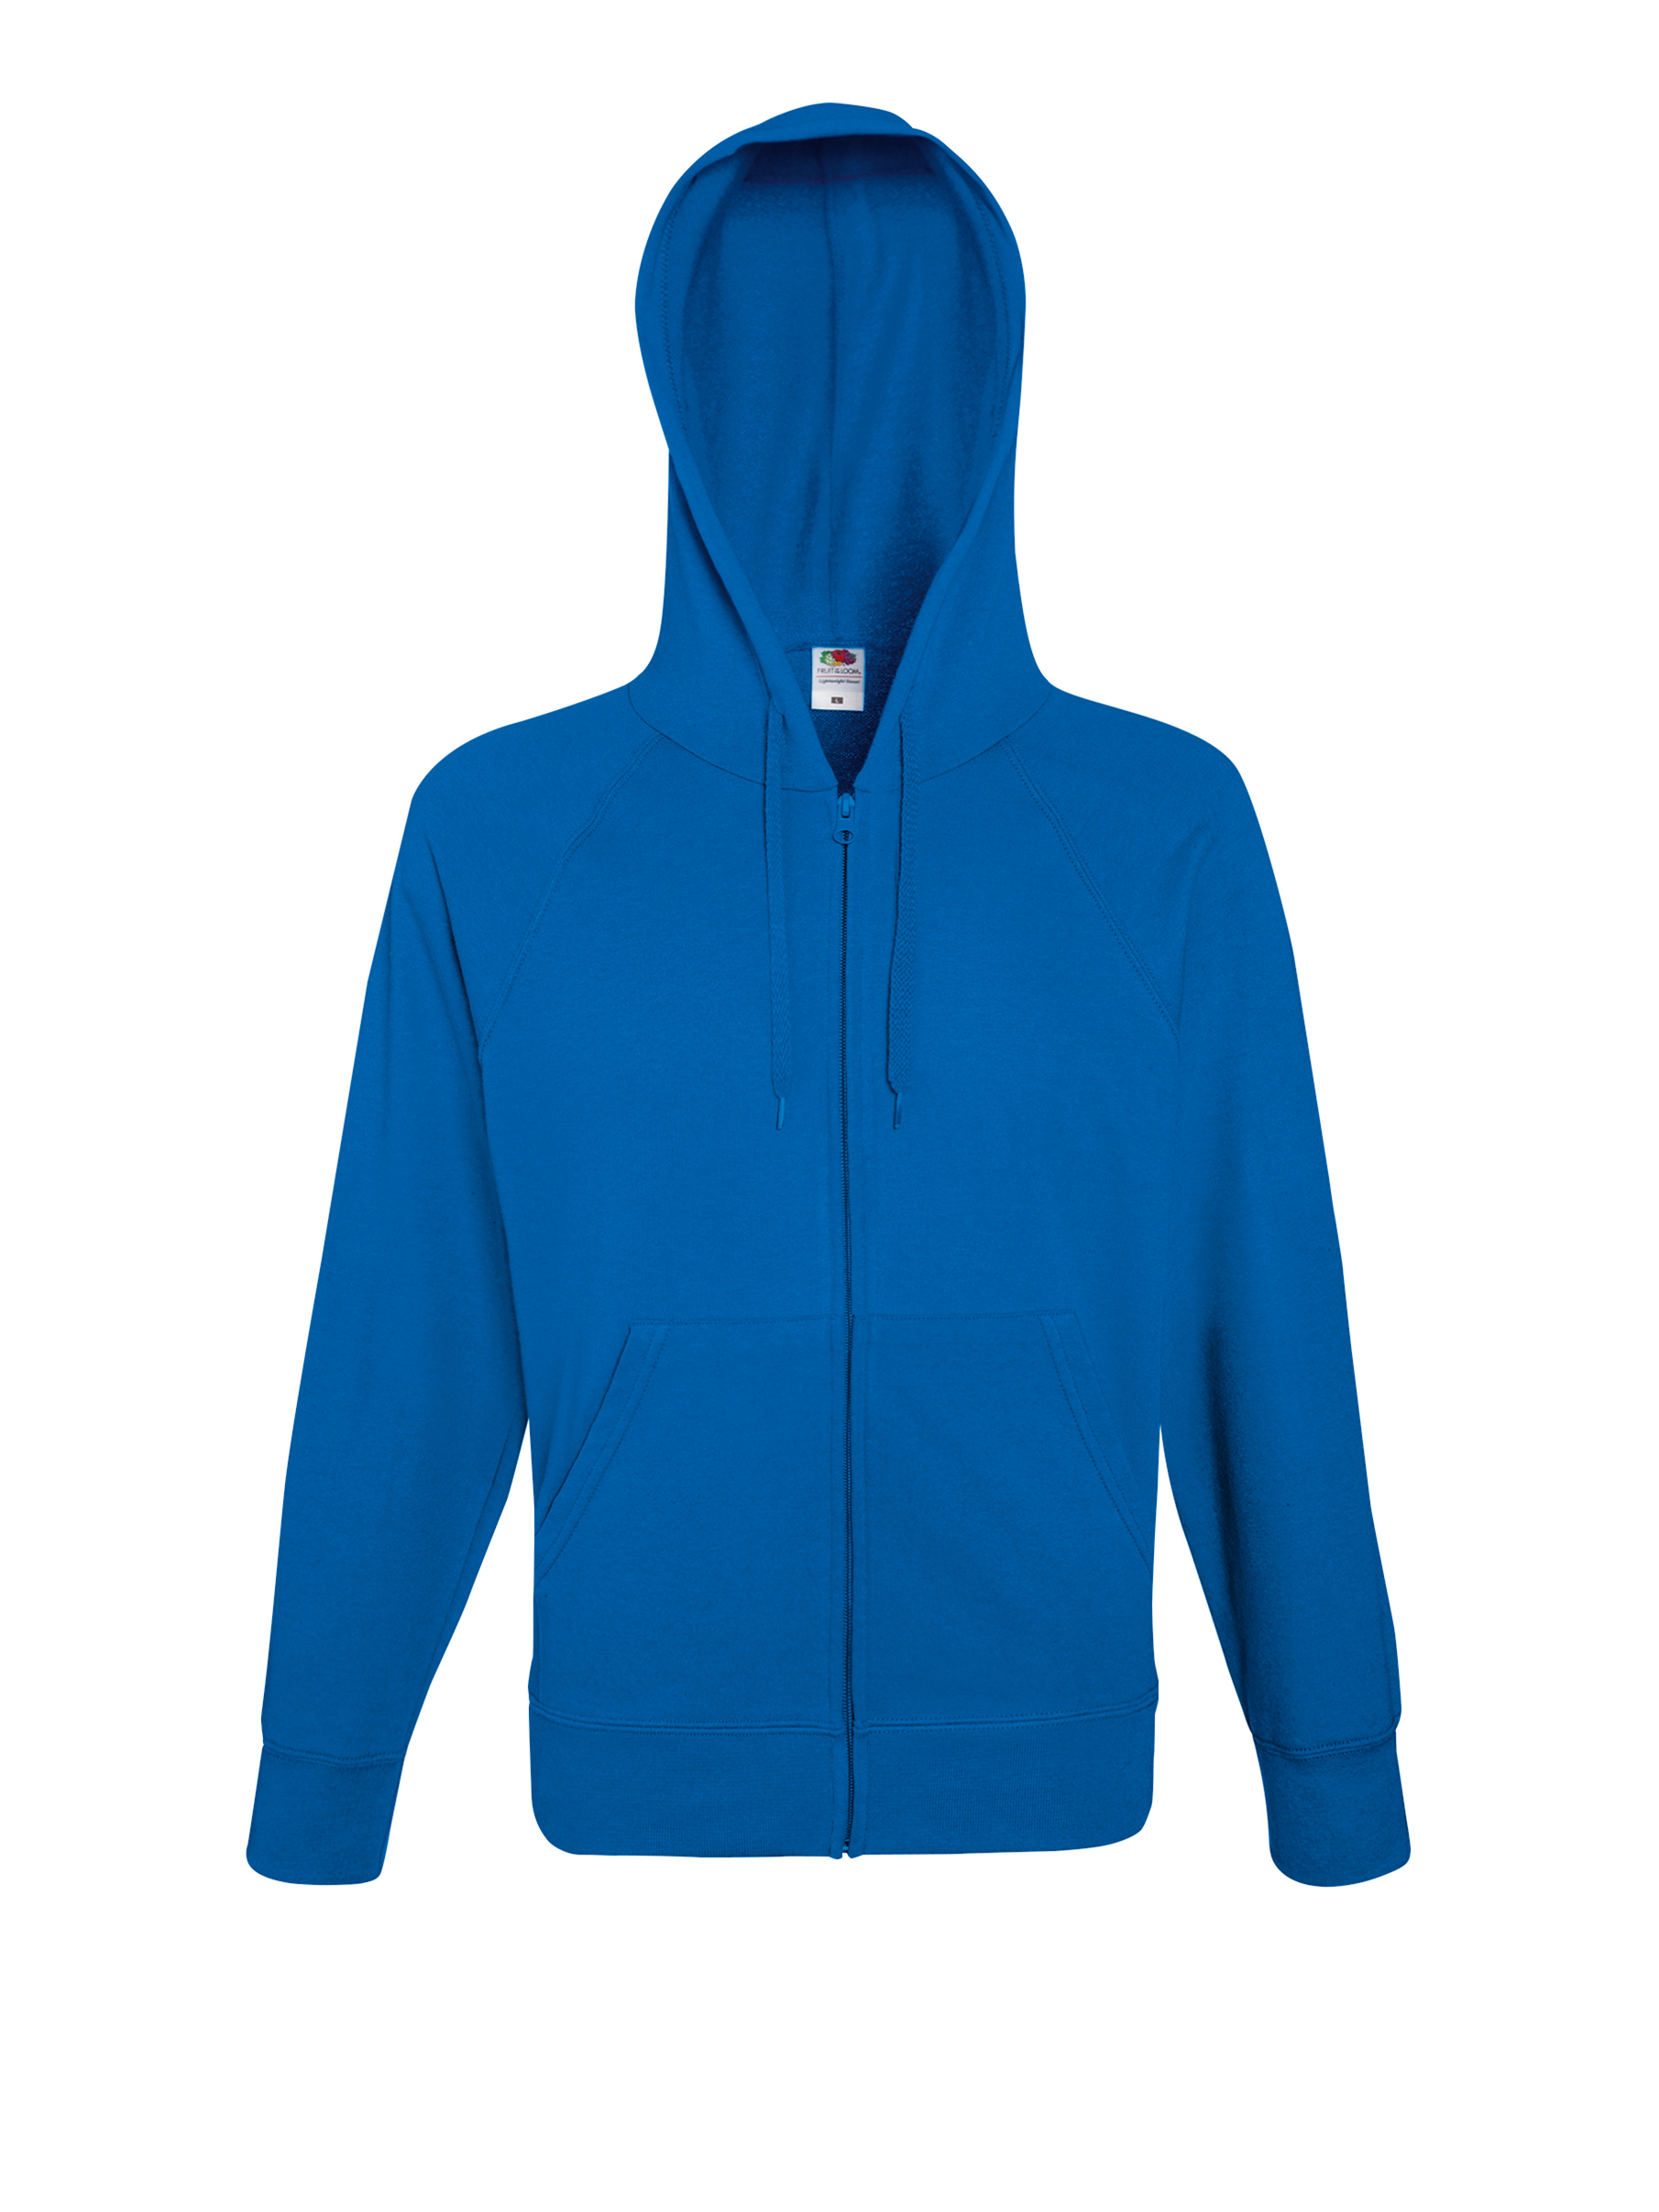 ax-httpswebsystems.s3.amazonaws.comtmp_for_downloadfruit-of-the-loom-lightweight-hooded-sweatshirt-jacket-royal-blue.jpeg